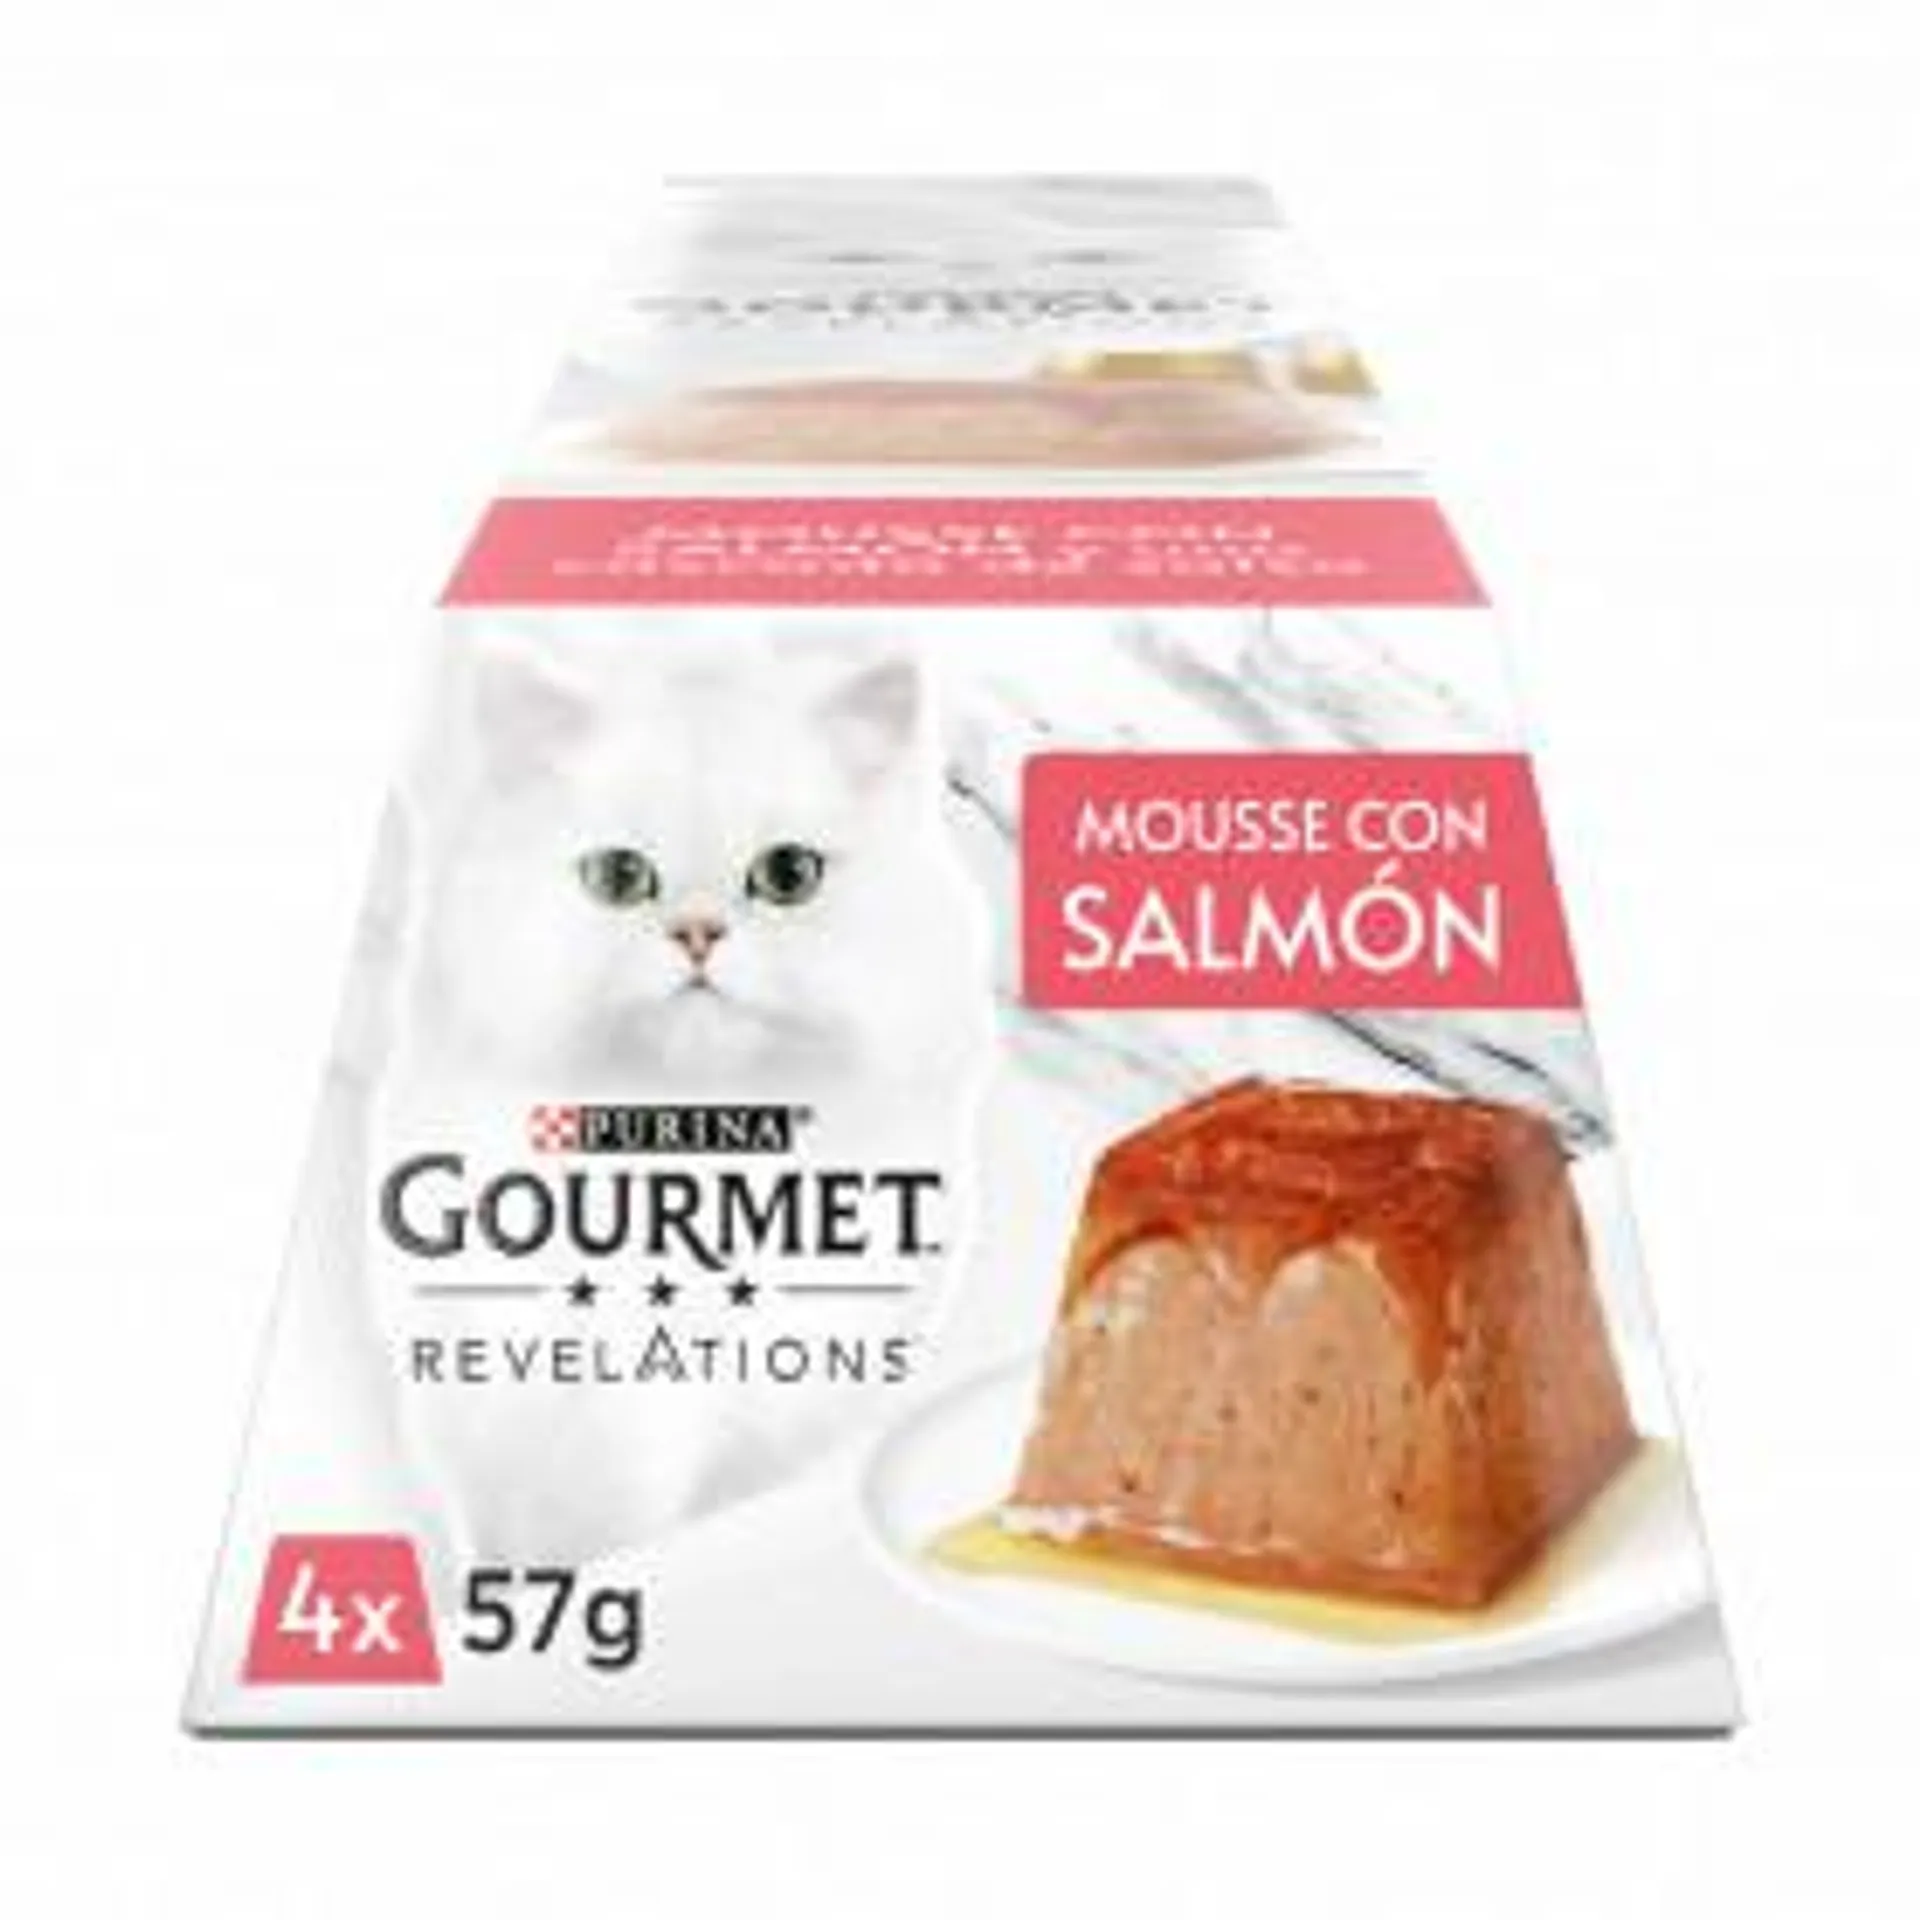 Purina Gourmet Revelations Mousse con Salmón